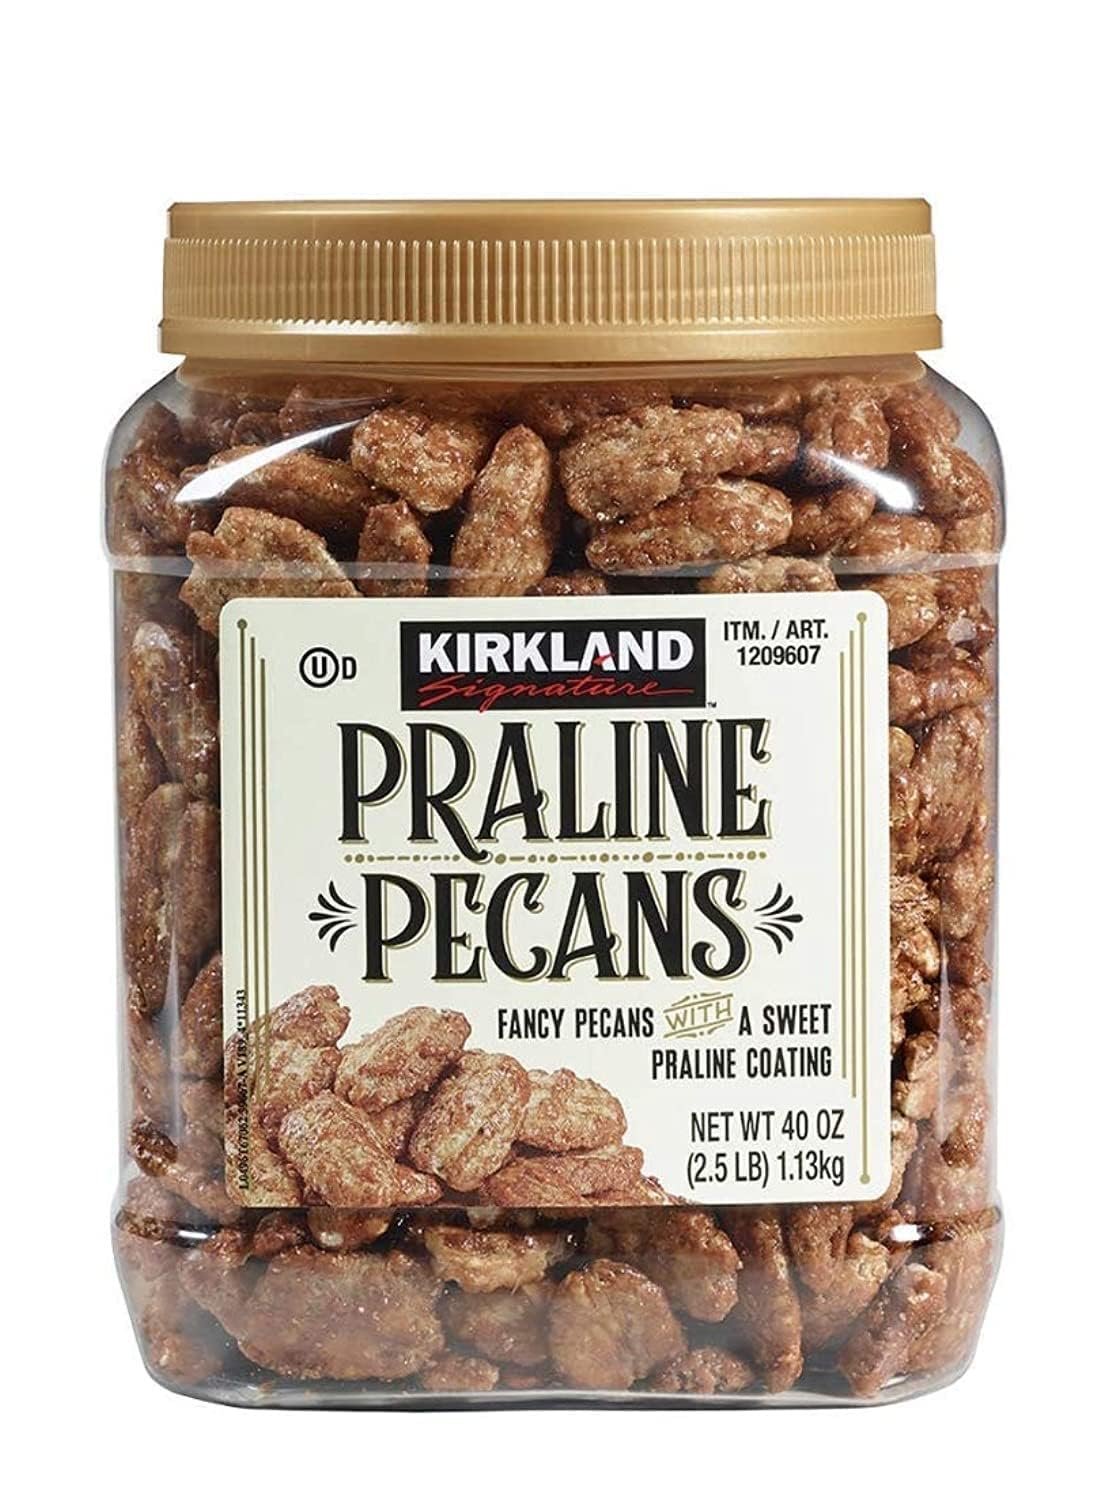 Kirkland Signature Sweet Praline Pecans, 2.5lb - Nut Snack - 1 Pack with Keychain